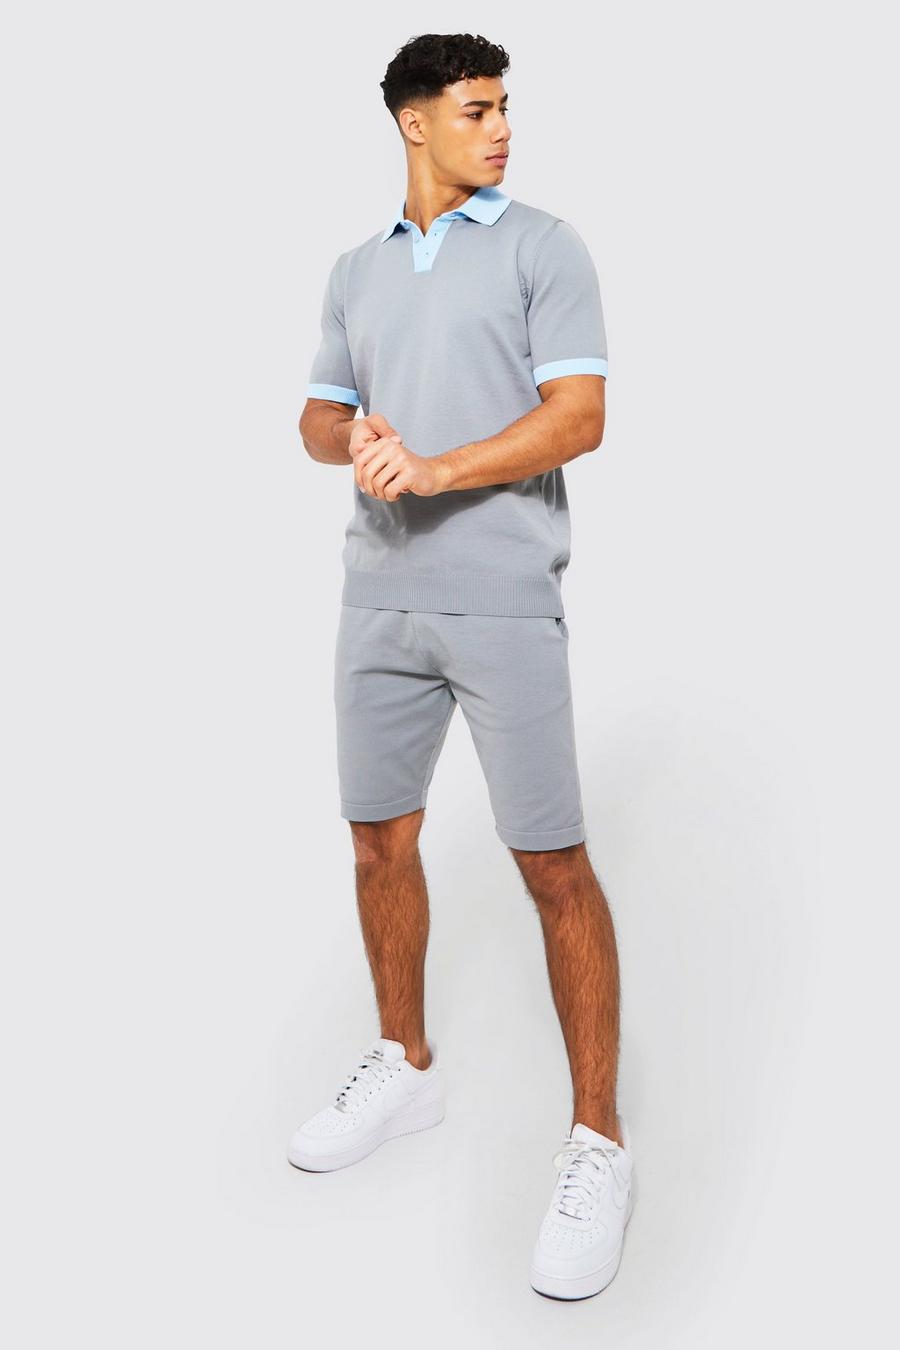 Charcoal grey Short Sleeve Contrast Knit Polo & Shorts Set